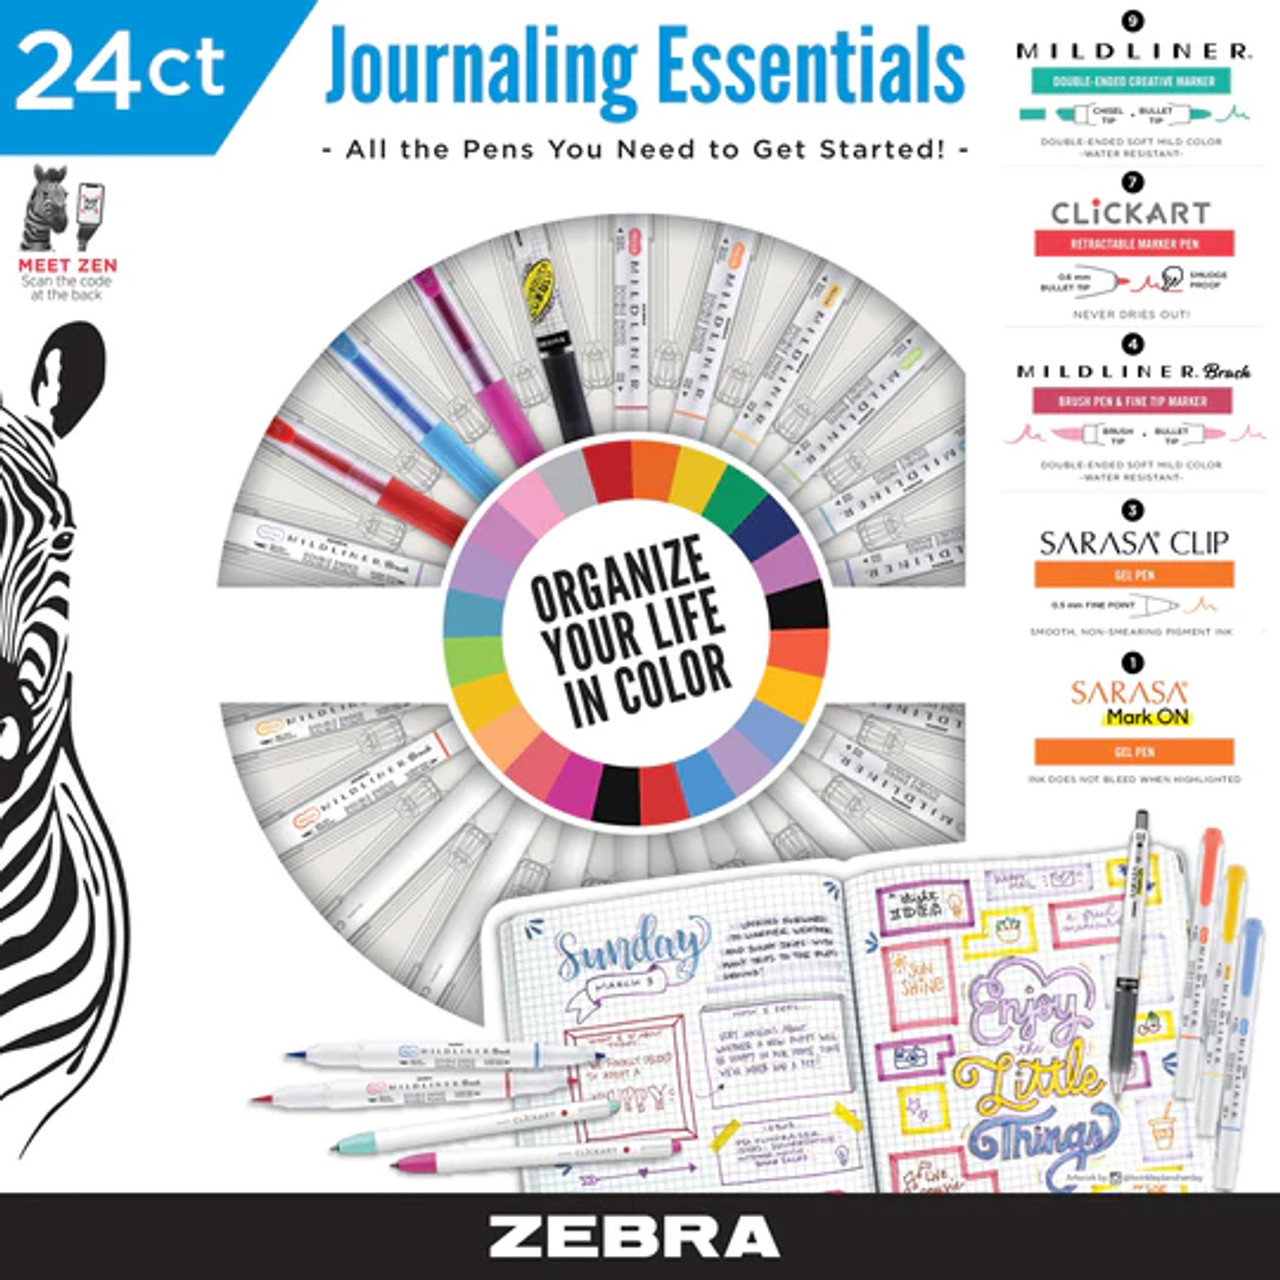 Zebra Mildliner Double Ended Highlighter Variety Pack, Asst Ink